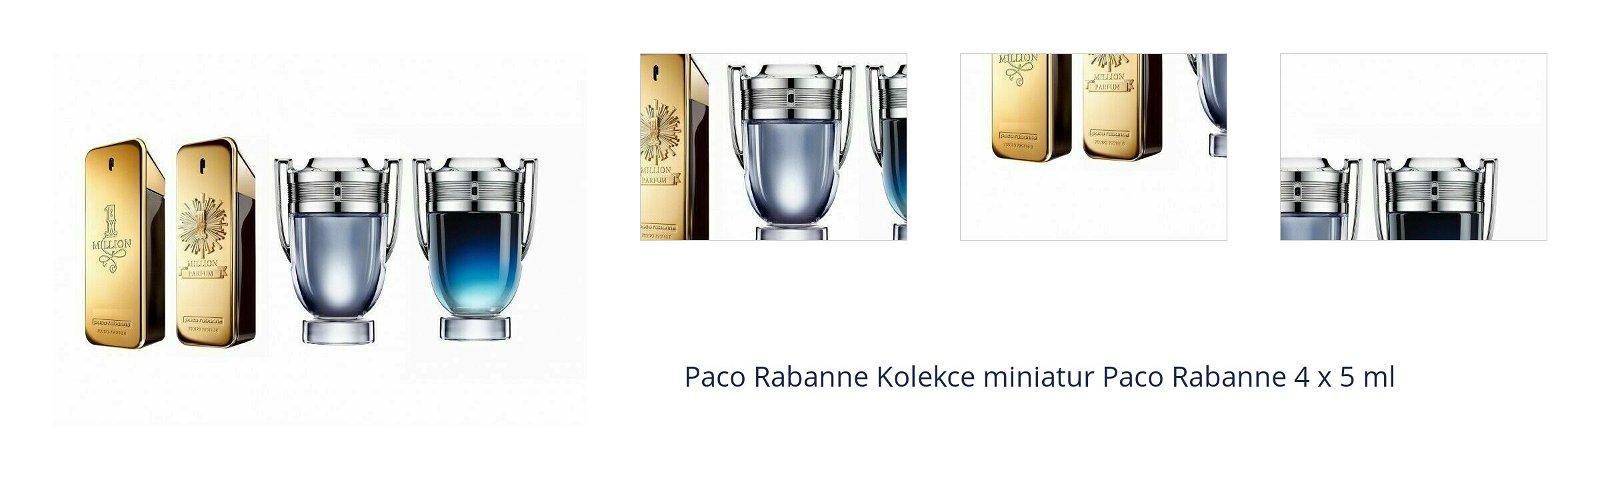 Paco Rabanne Kolekce miniatur Paco Rabanne 4 x 5 ml 1